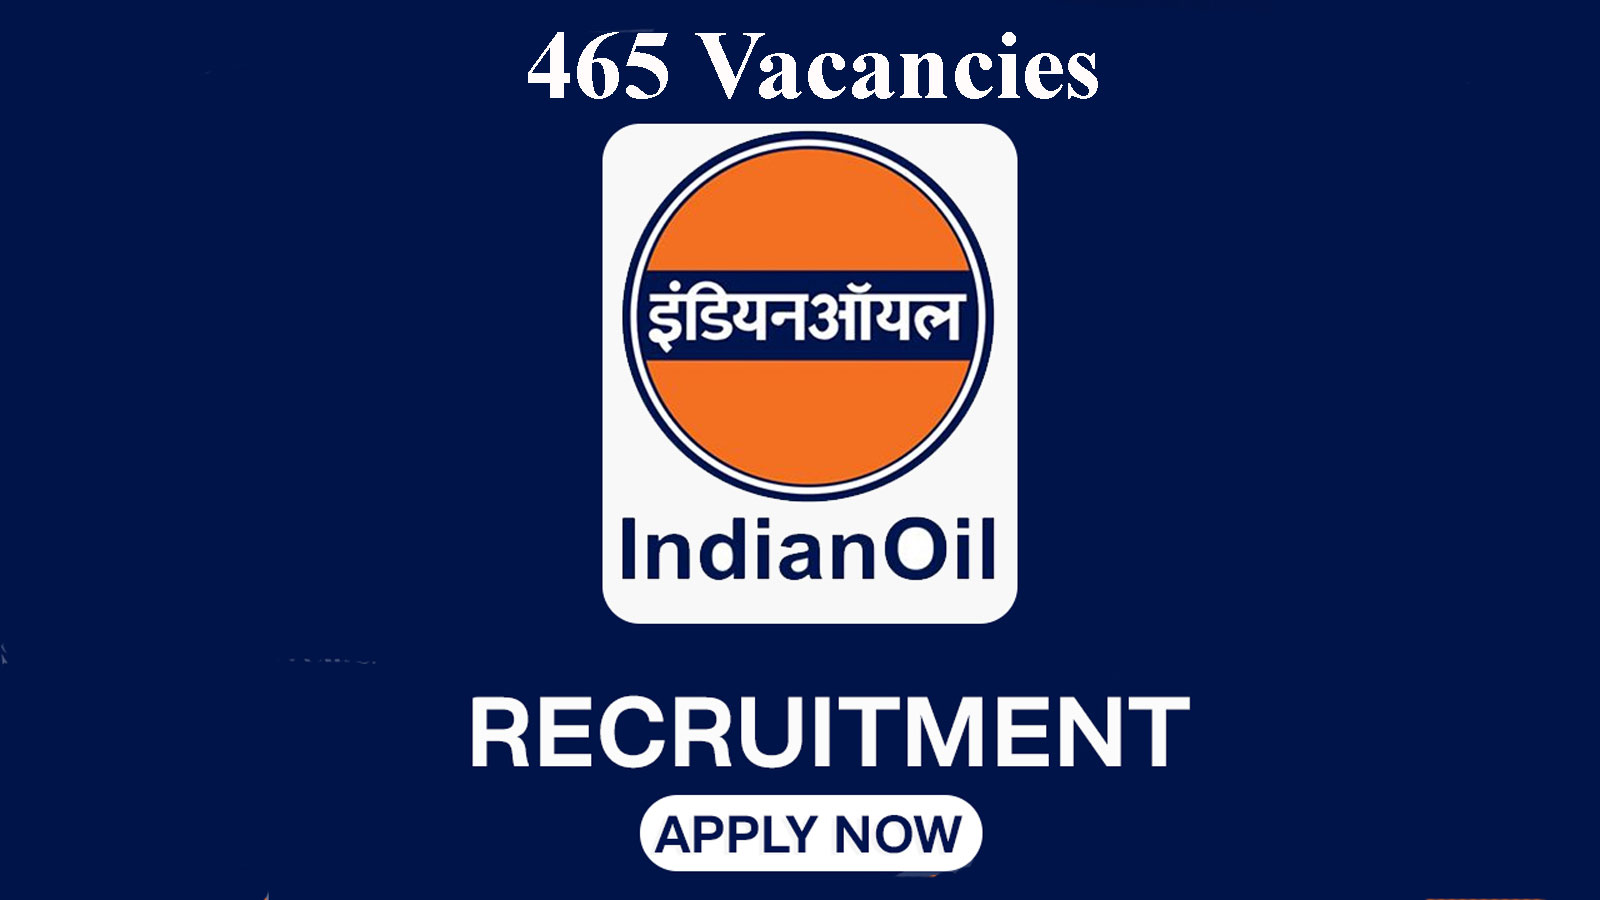 465 vacancies, Indian Oil Recruitment 2022